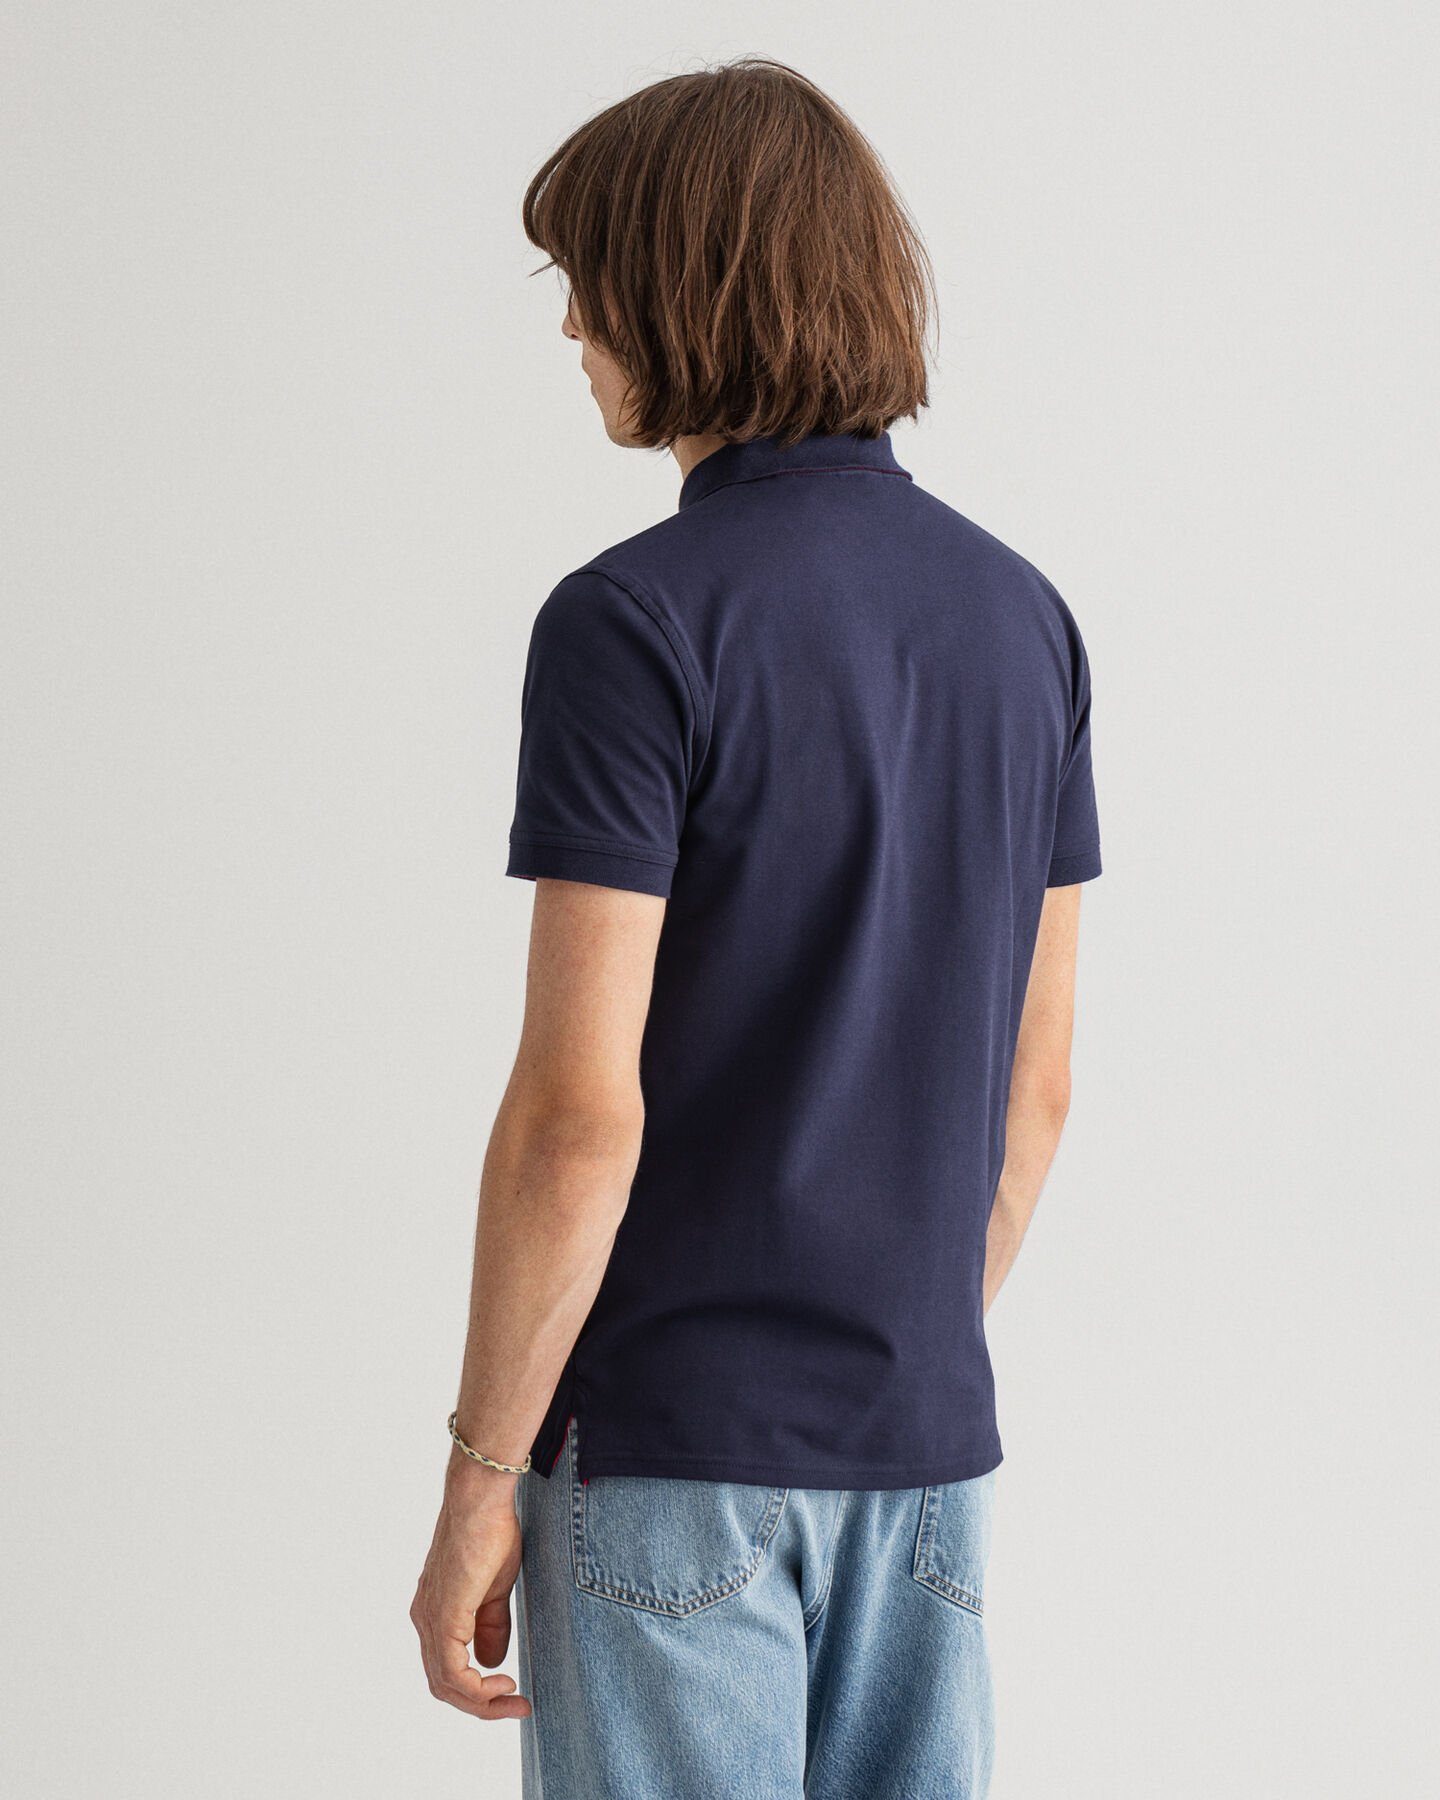 Gant mit Rugger kontrastfarbener Shirt Dunkelblau Poloshirt Poloshirt Piqué